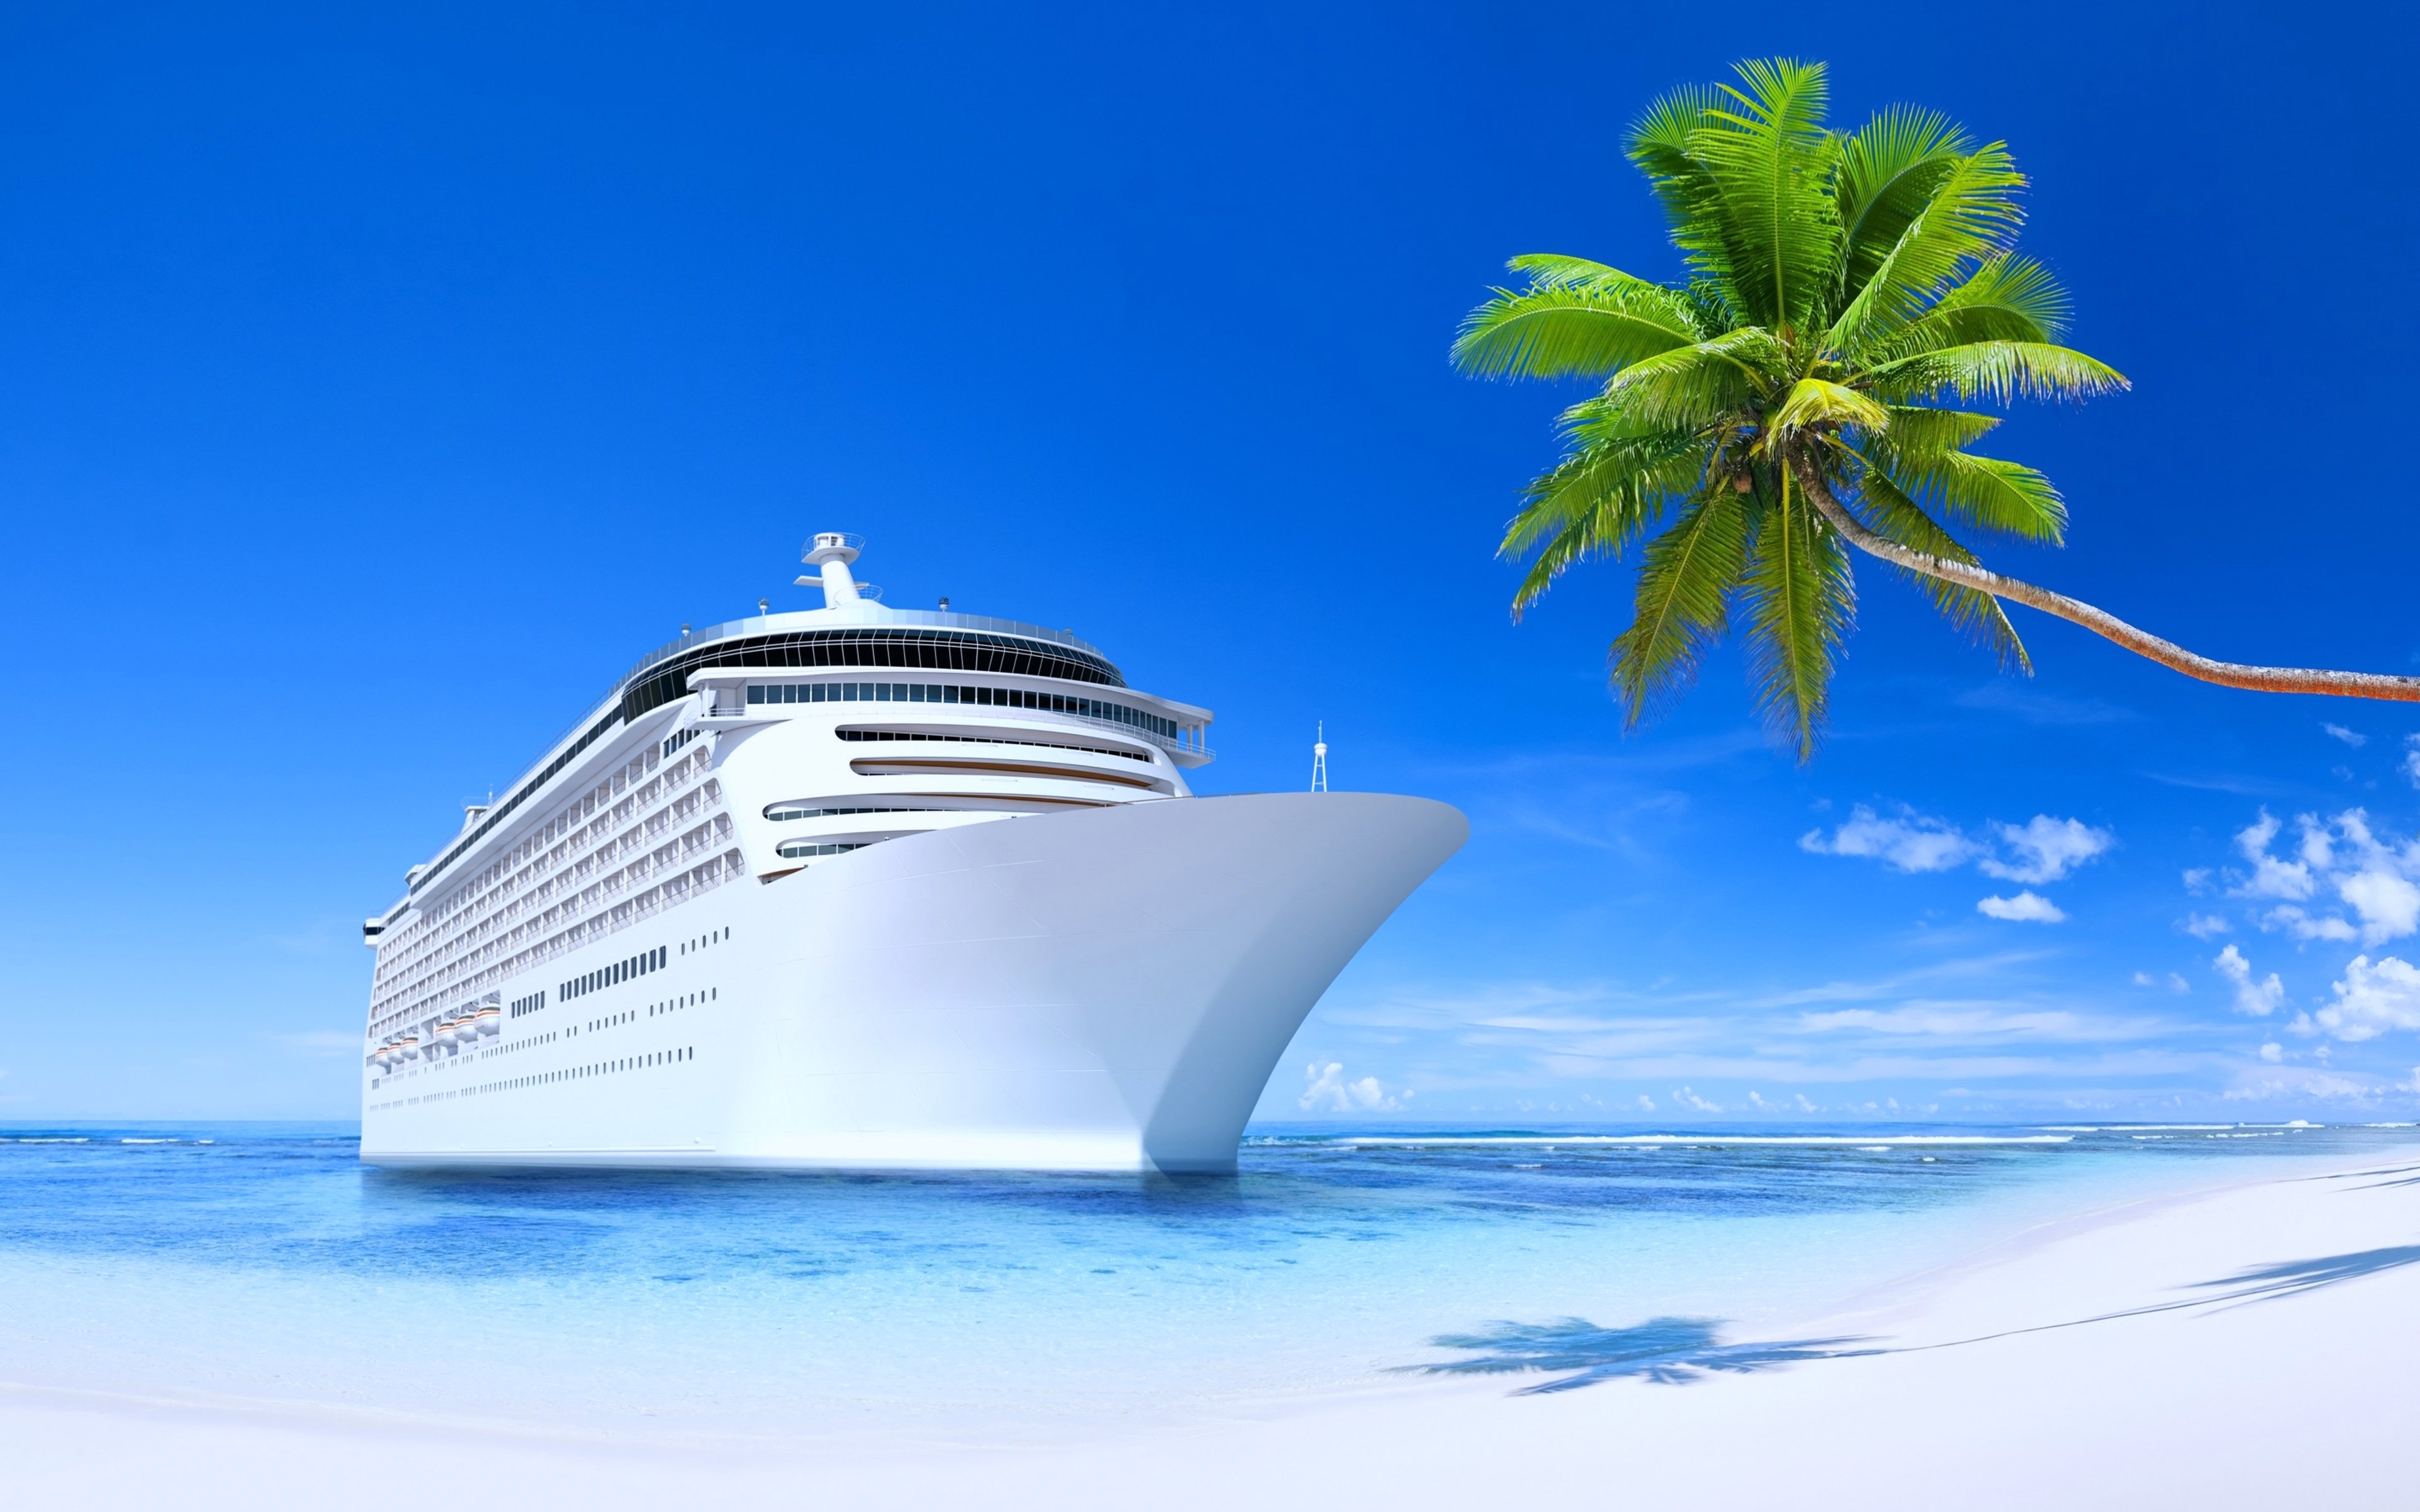 steamship, Ship, Tourism, Travel, Beach, Island, Sunny, Blue, Summer, Palms, Sand, Sea, Calm ...